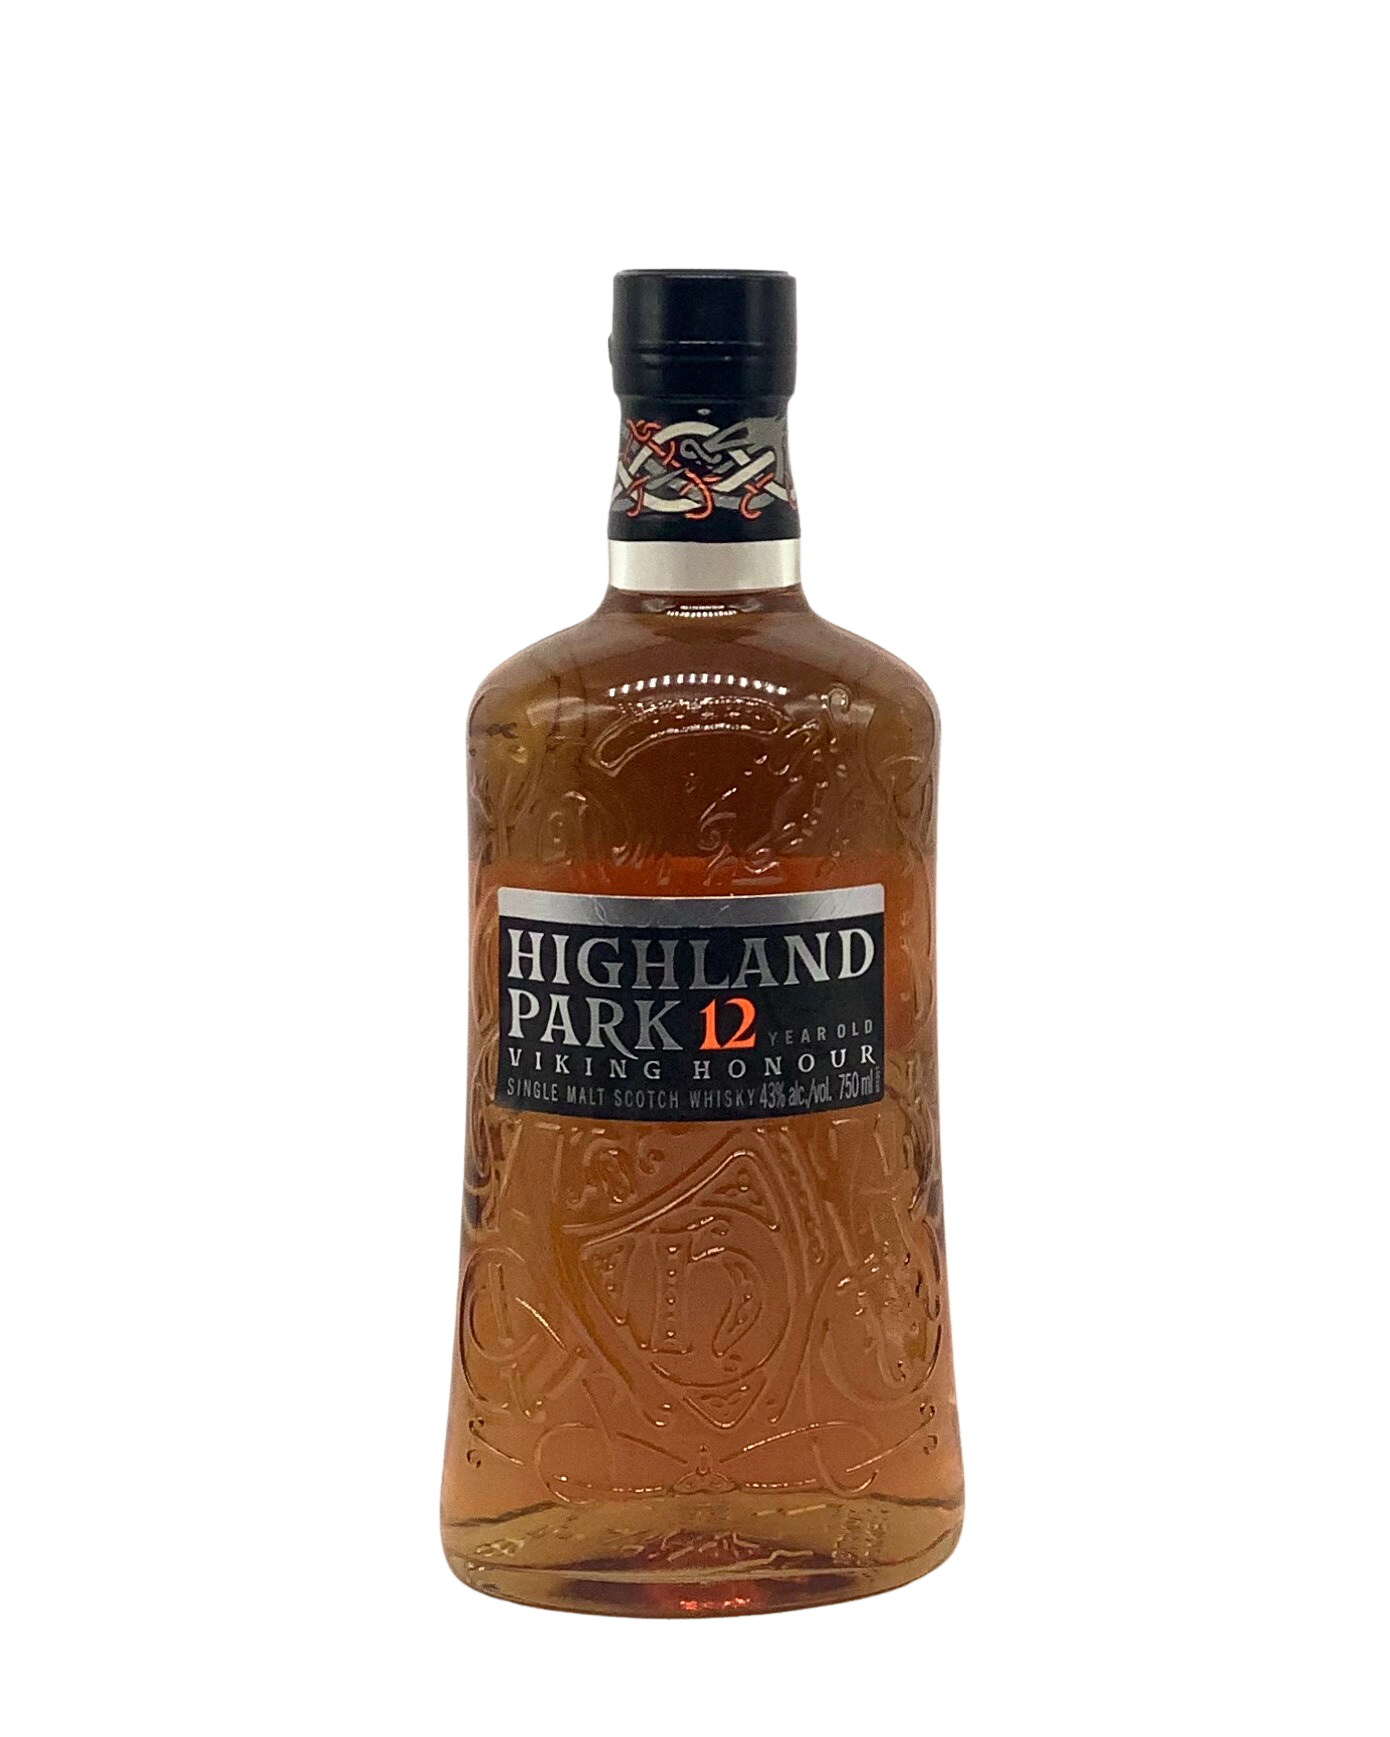 Highland Park 12 Year Viking Honour Single Malt Scotch Whisky